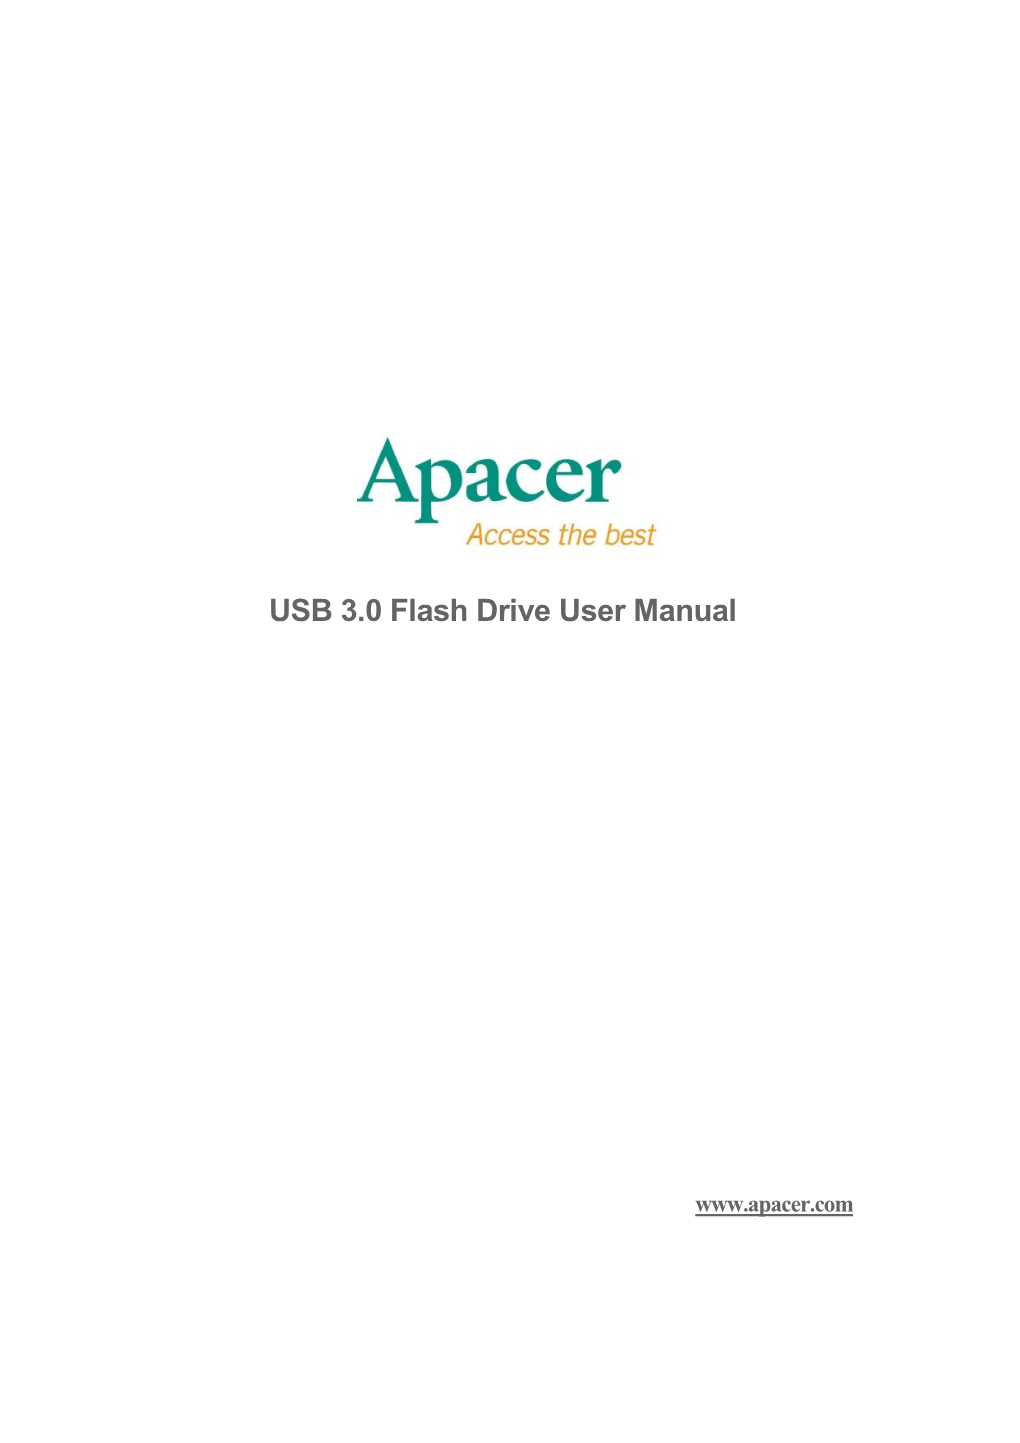 USB 3.0 Flash Drive User Manual